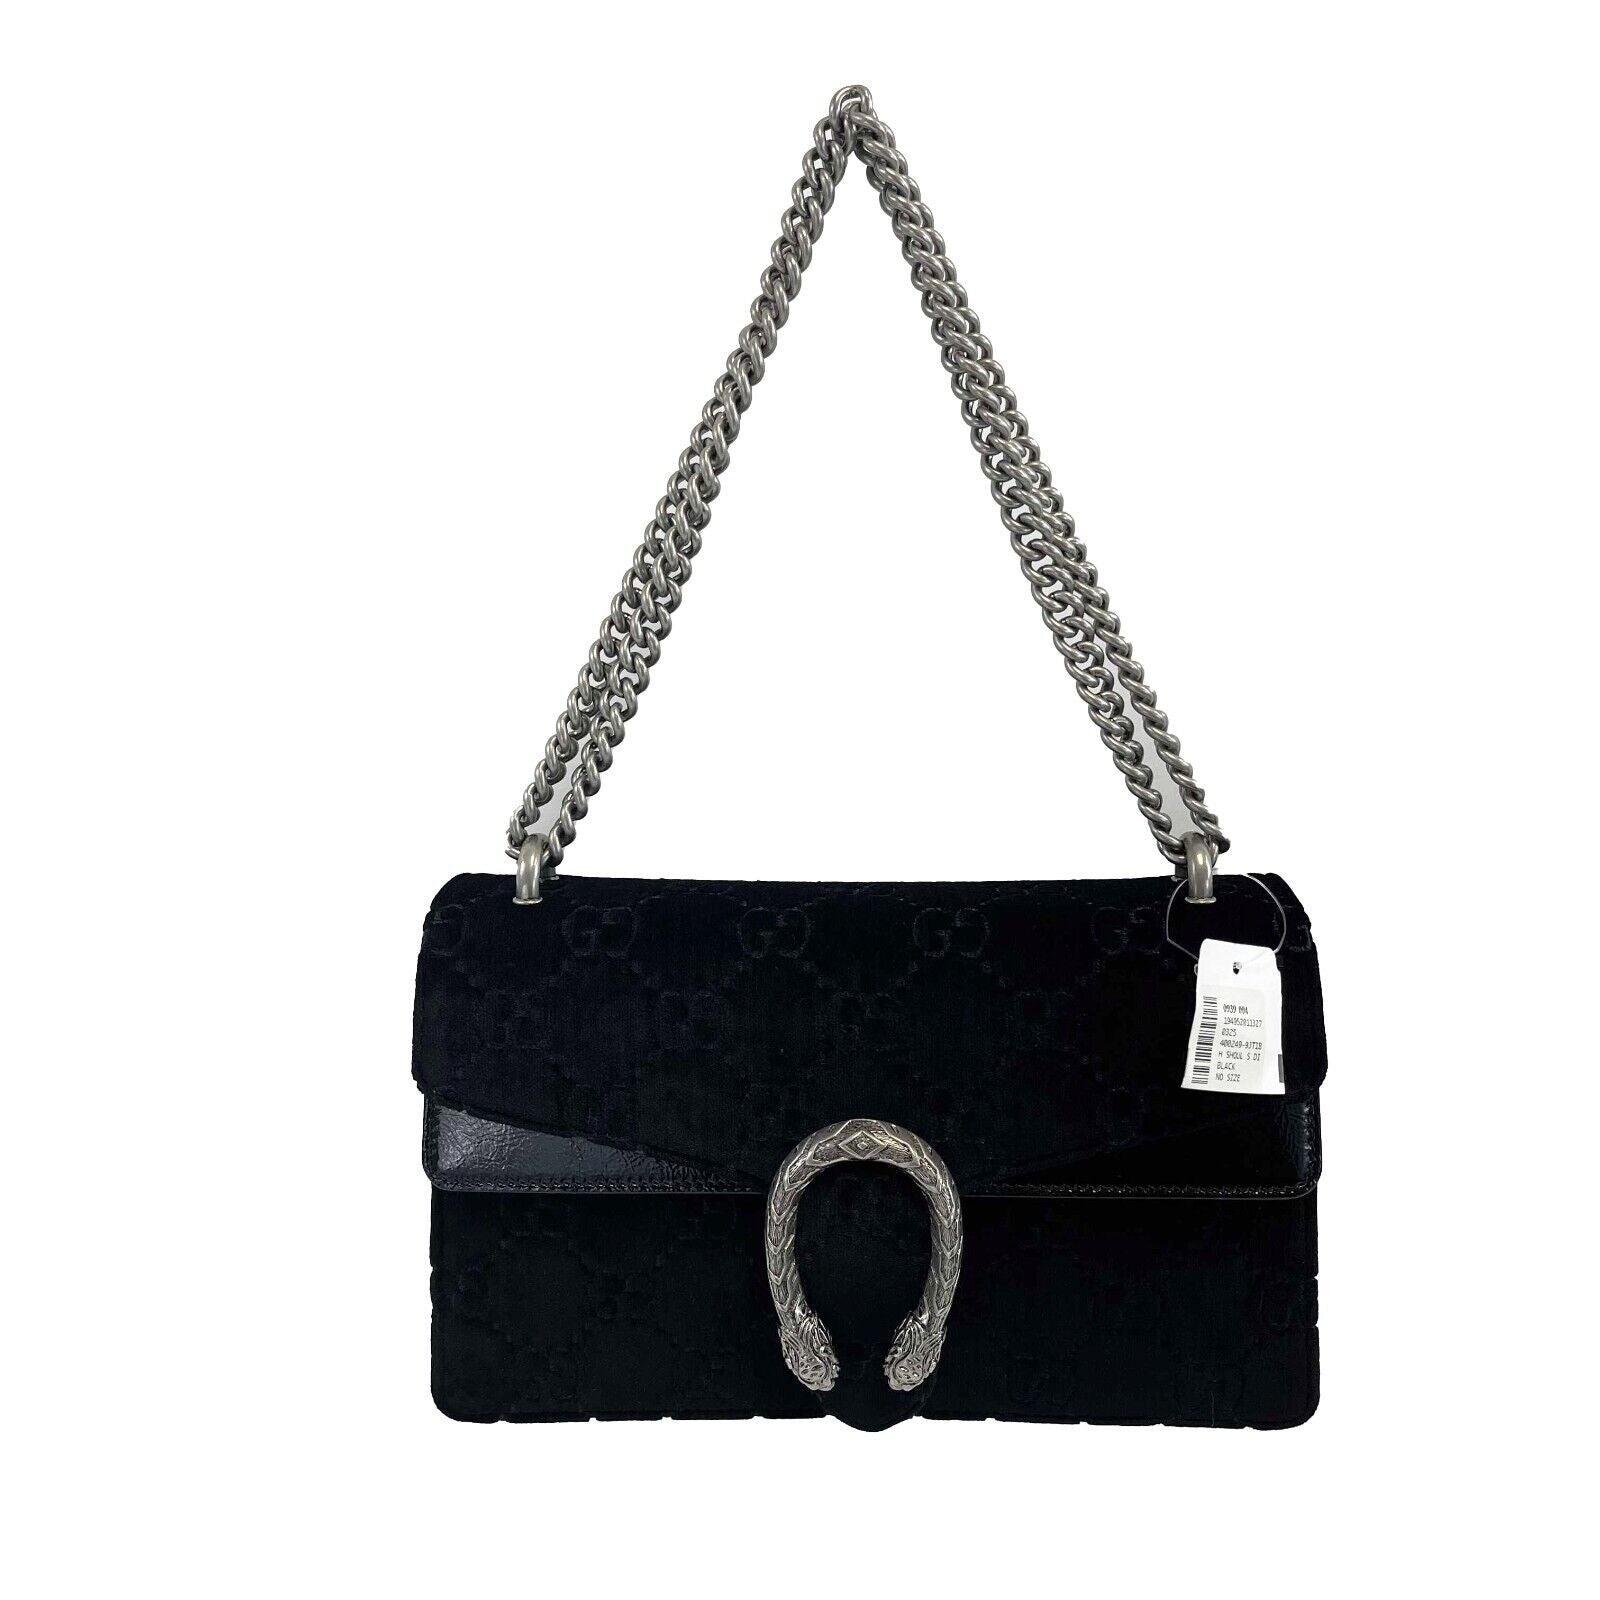 GUCCI - NEW Black / Silver Velvet Embossed GG Dionysus Small Shoulder Bag